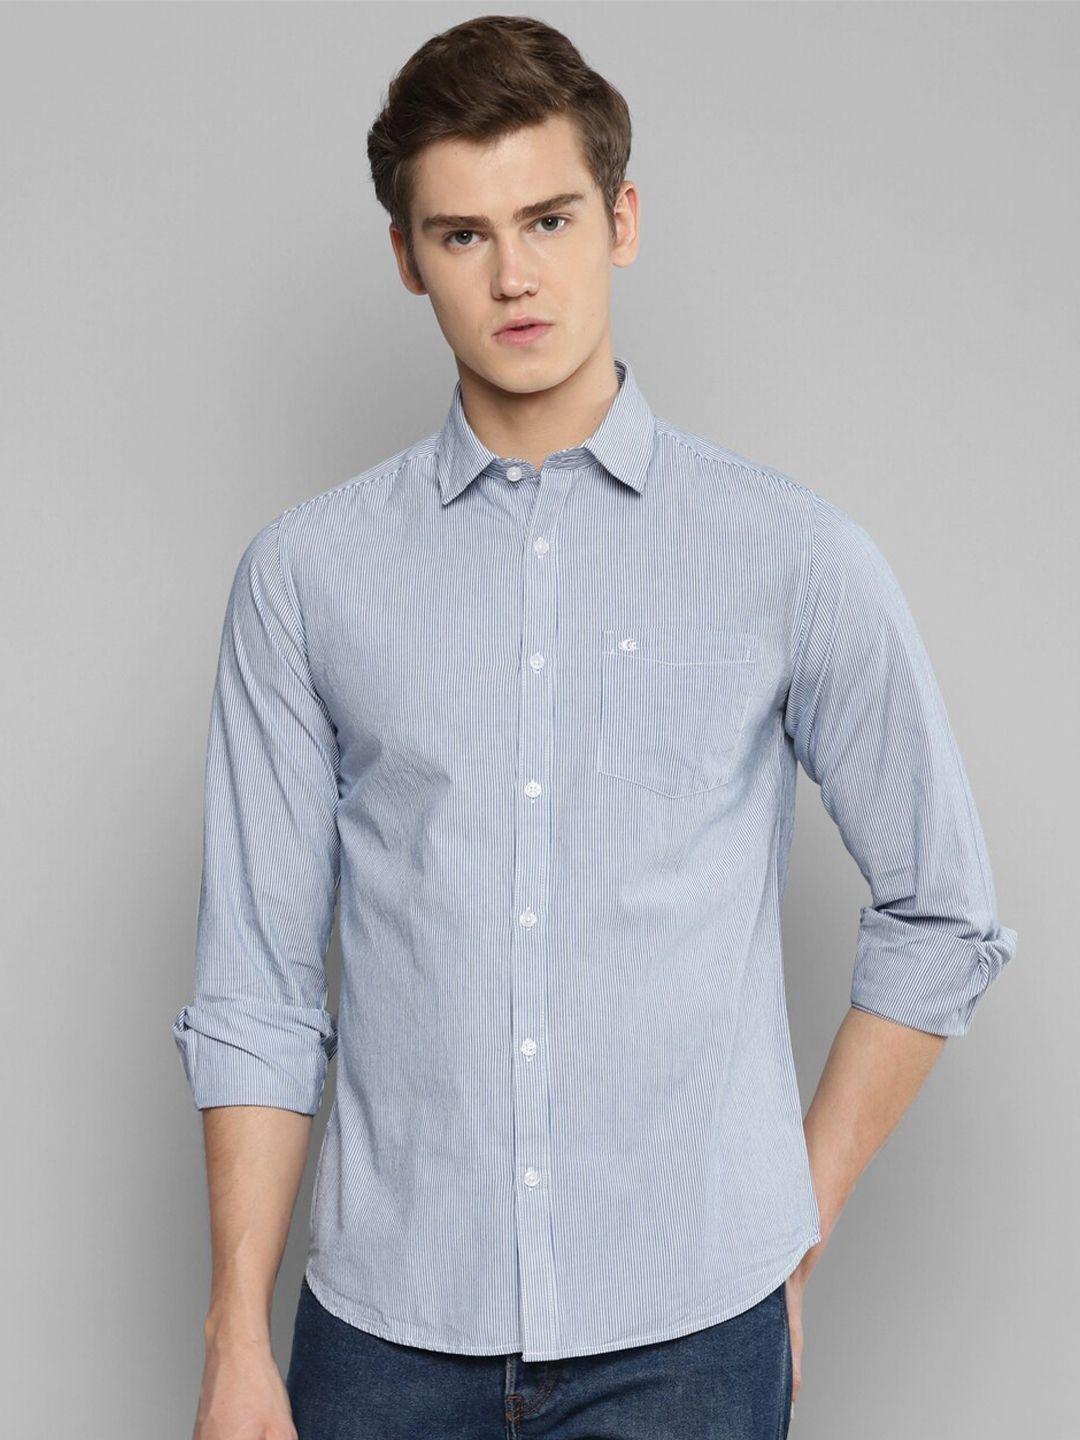 allen-cooper-vertical-striped-spread-collar-cotton-casual-shirt